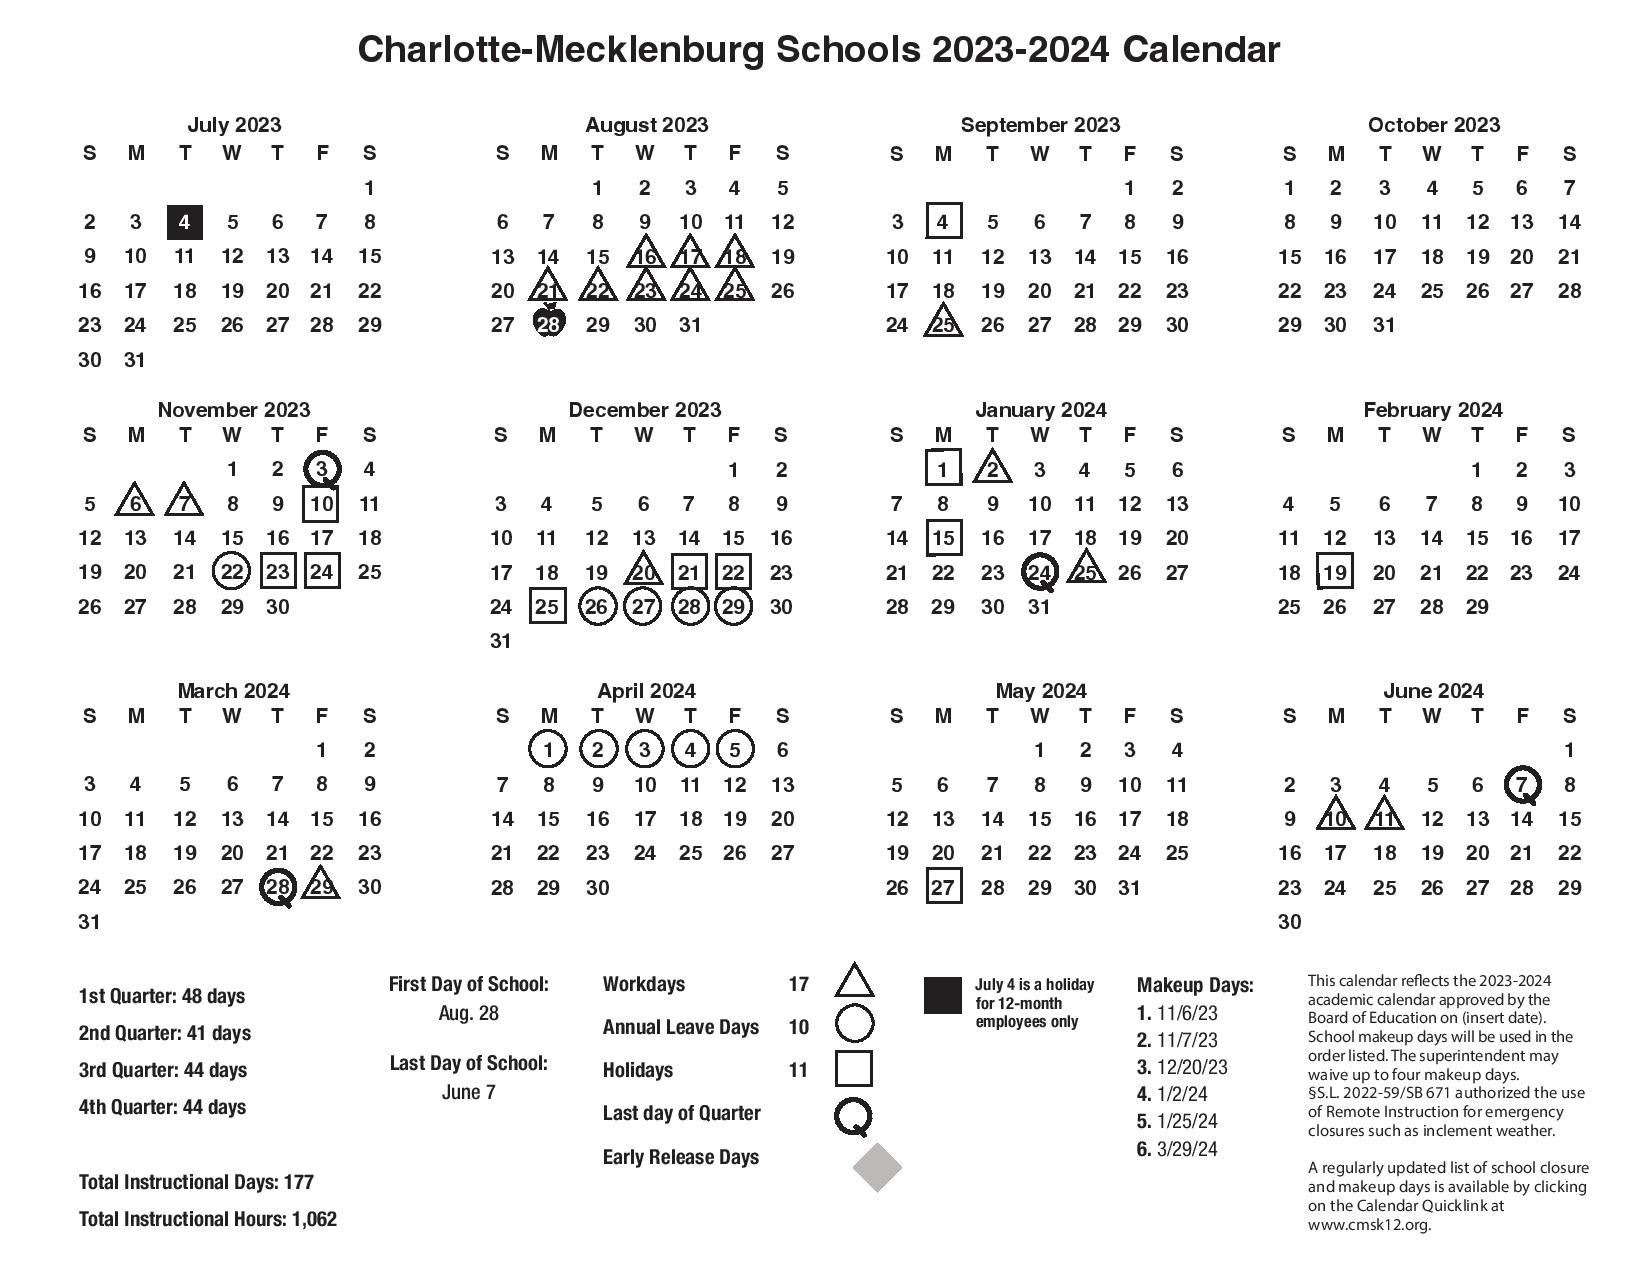 Ucsb School Calendar 2023 2024 Image to u